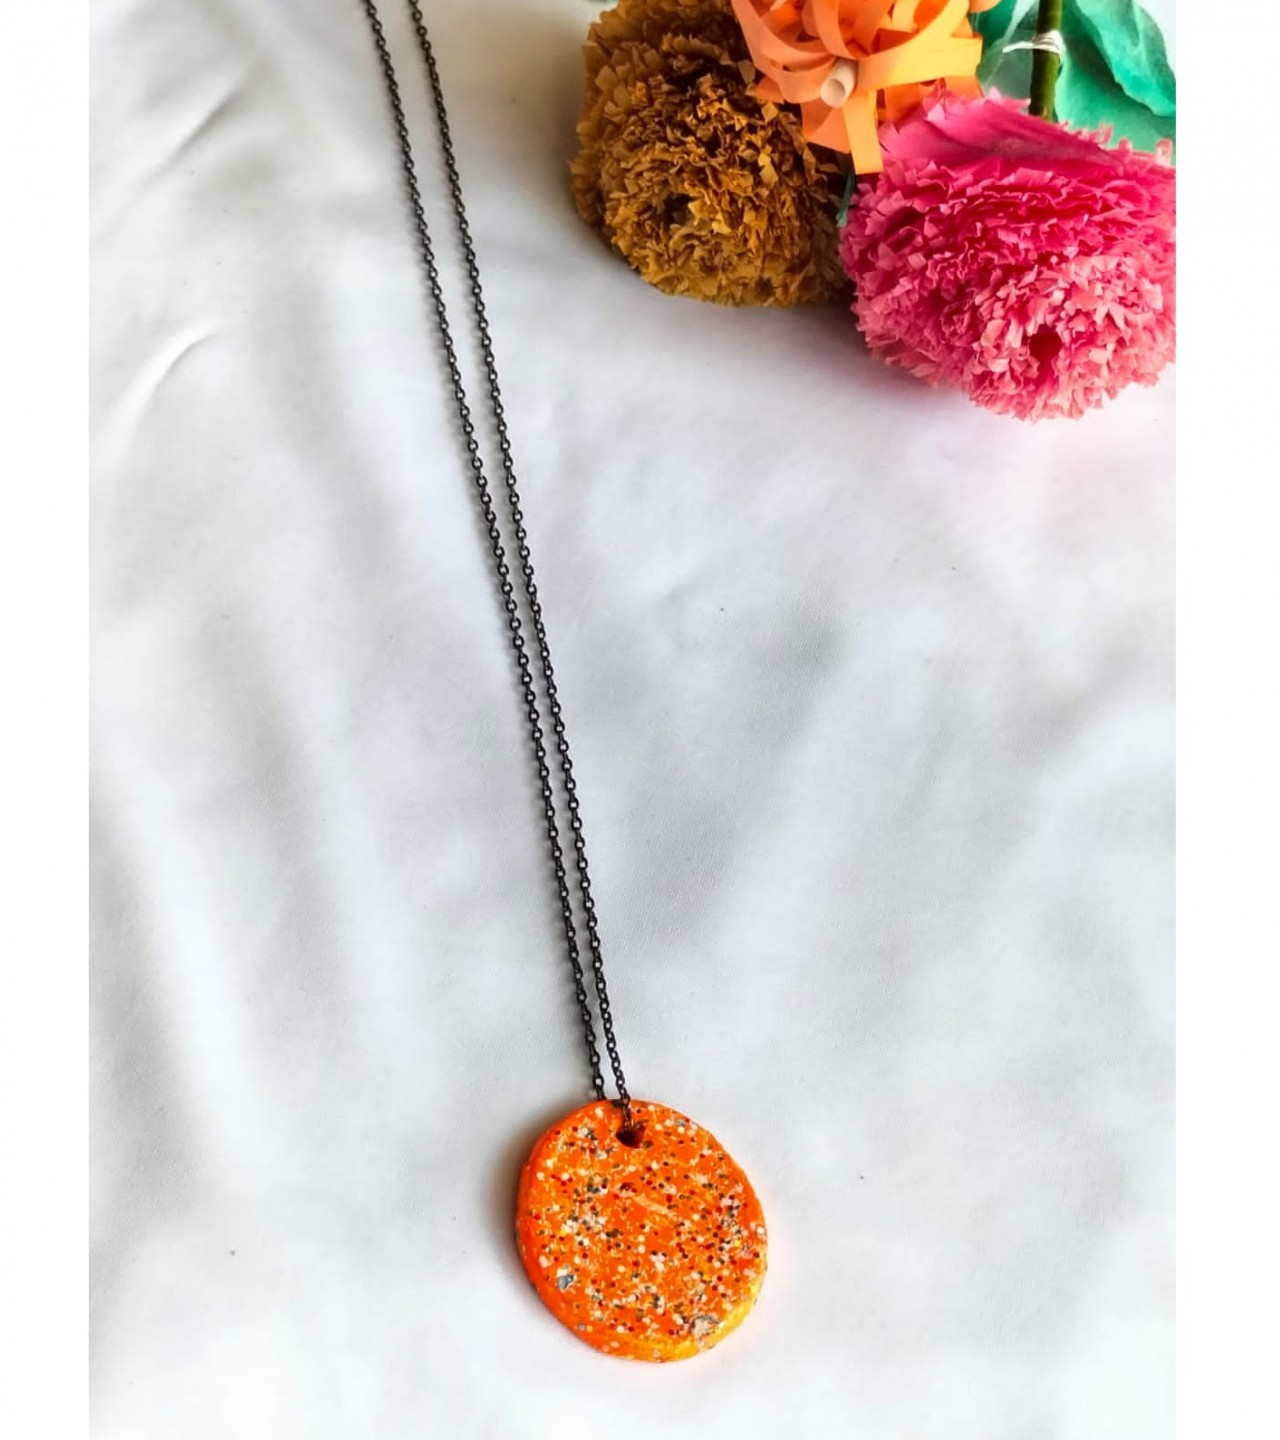 Sanatzar Geometric Dough  Necklace in Orange